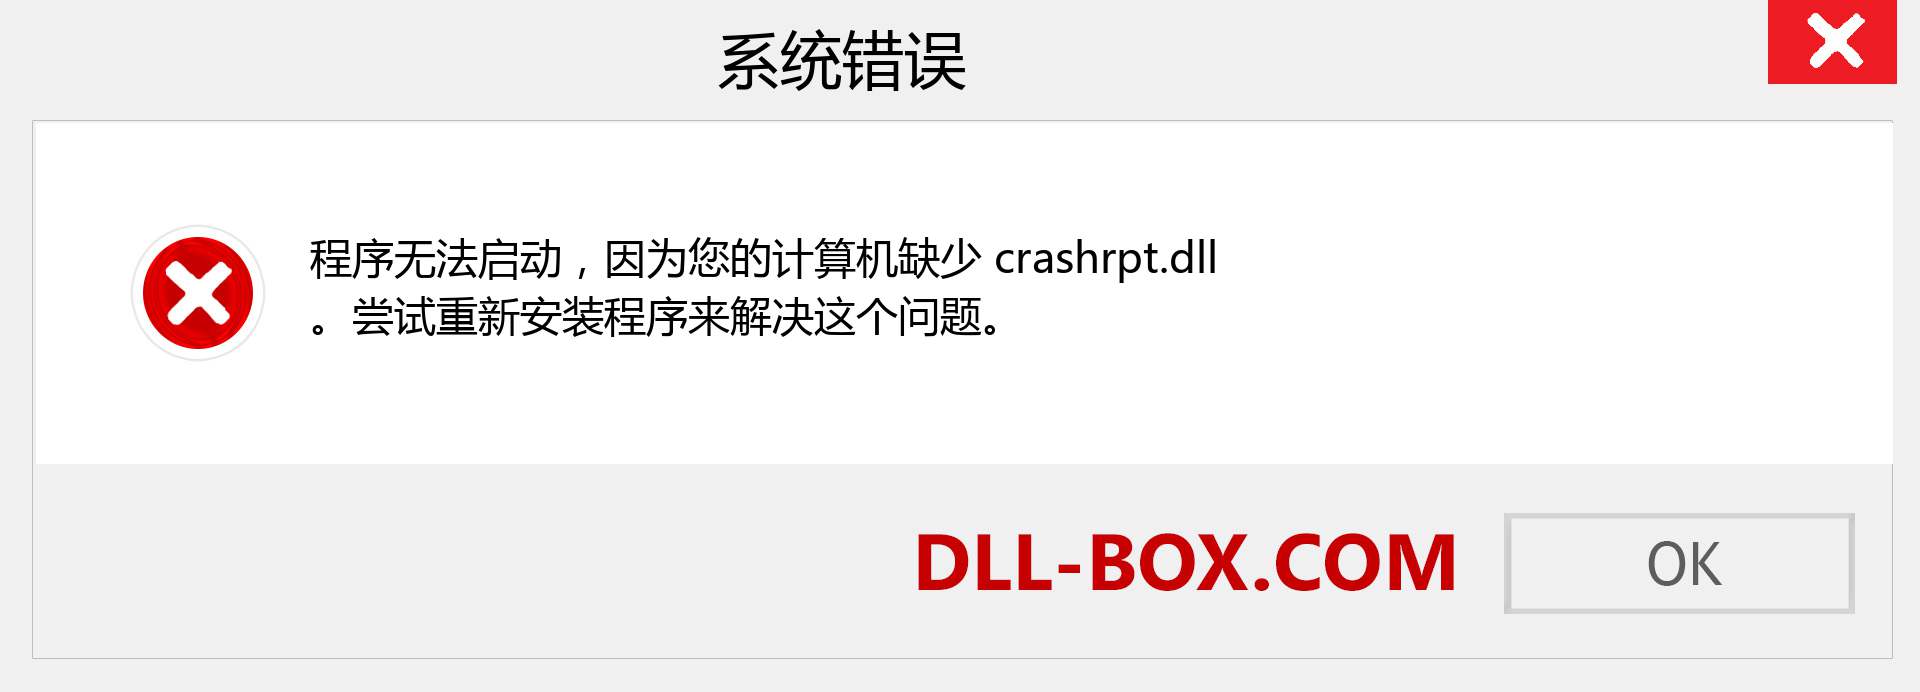 crashrpt.dll 文件丢失？。 适用于 Windows 7、8、10 的下载 - 修复 Windows、照片、图像上的 crashrpt dll 丢失错误